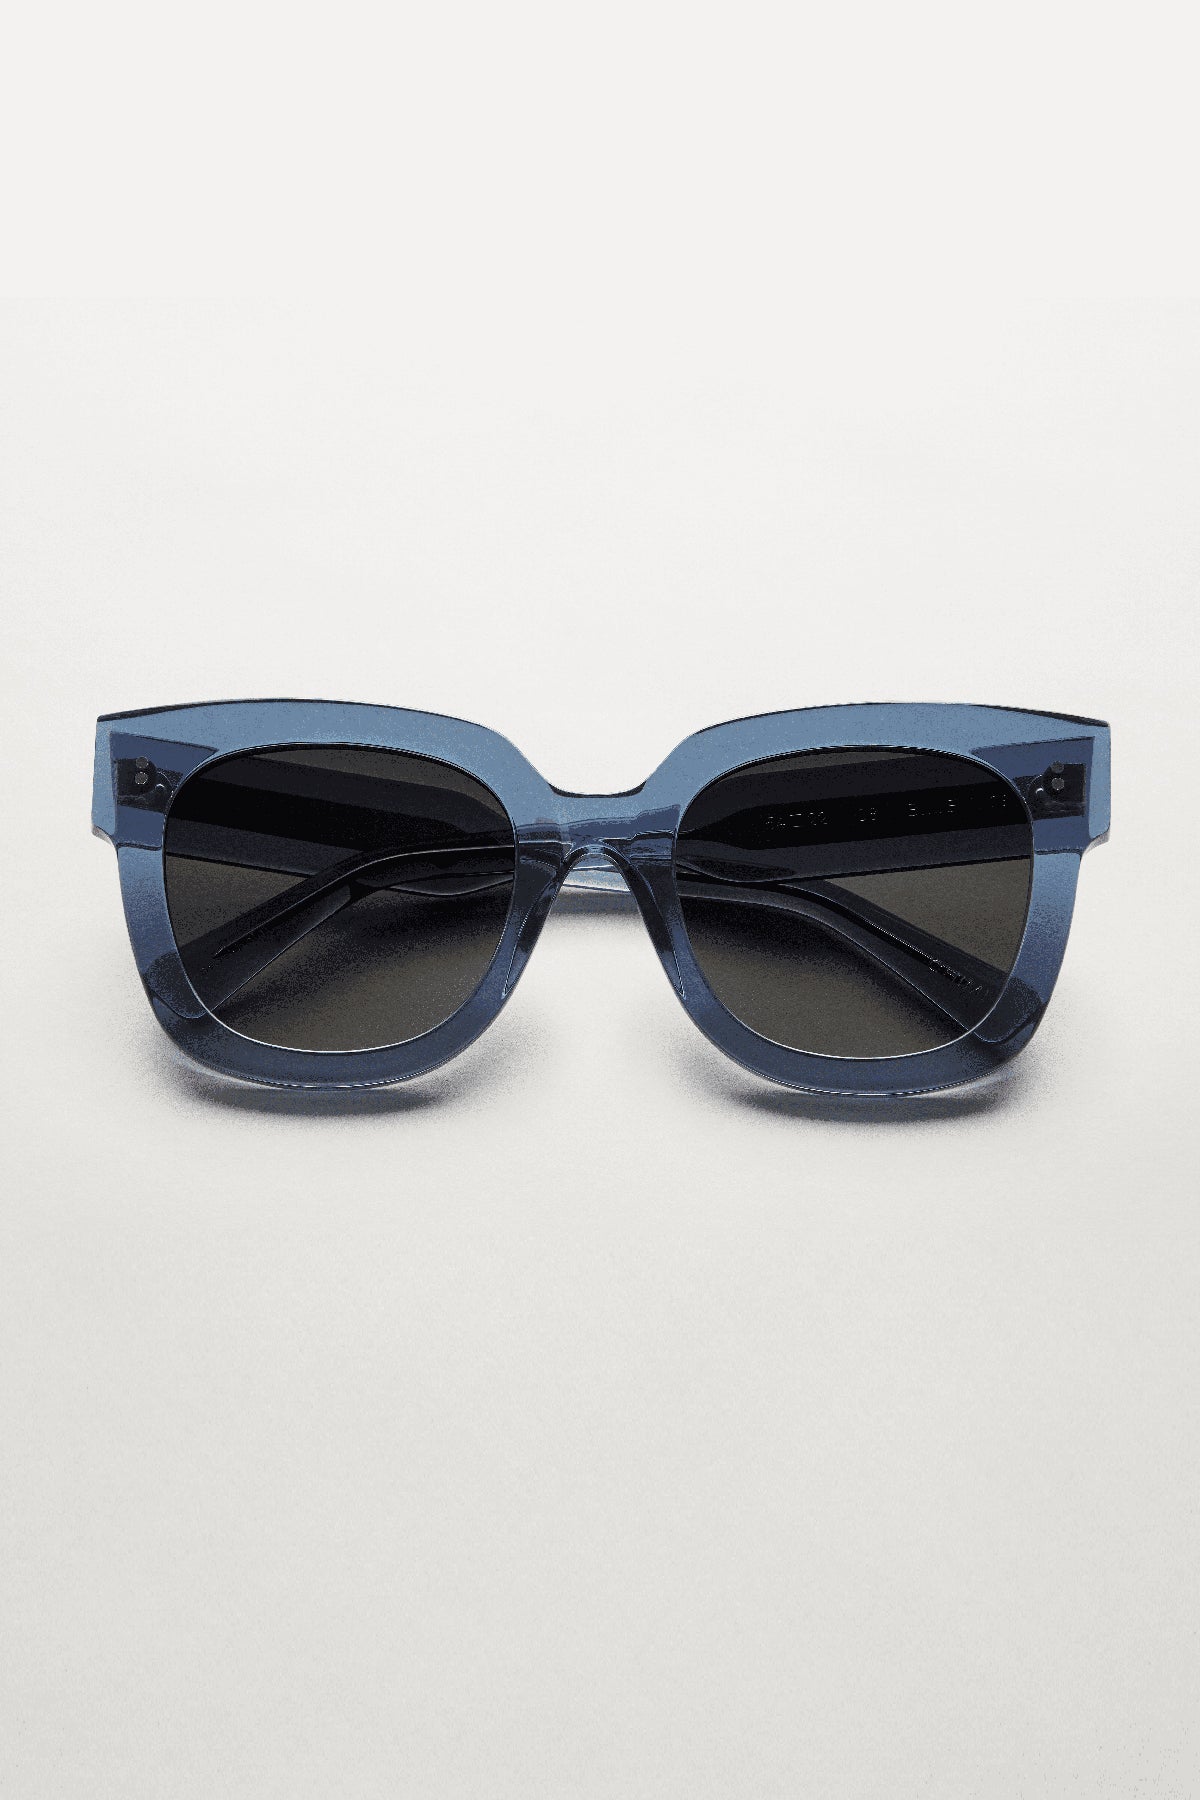 Chimi 08 Sunglasses Blue Front-22132856750273